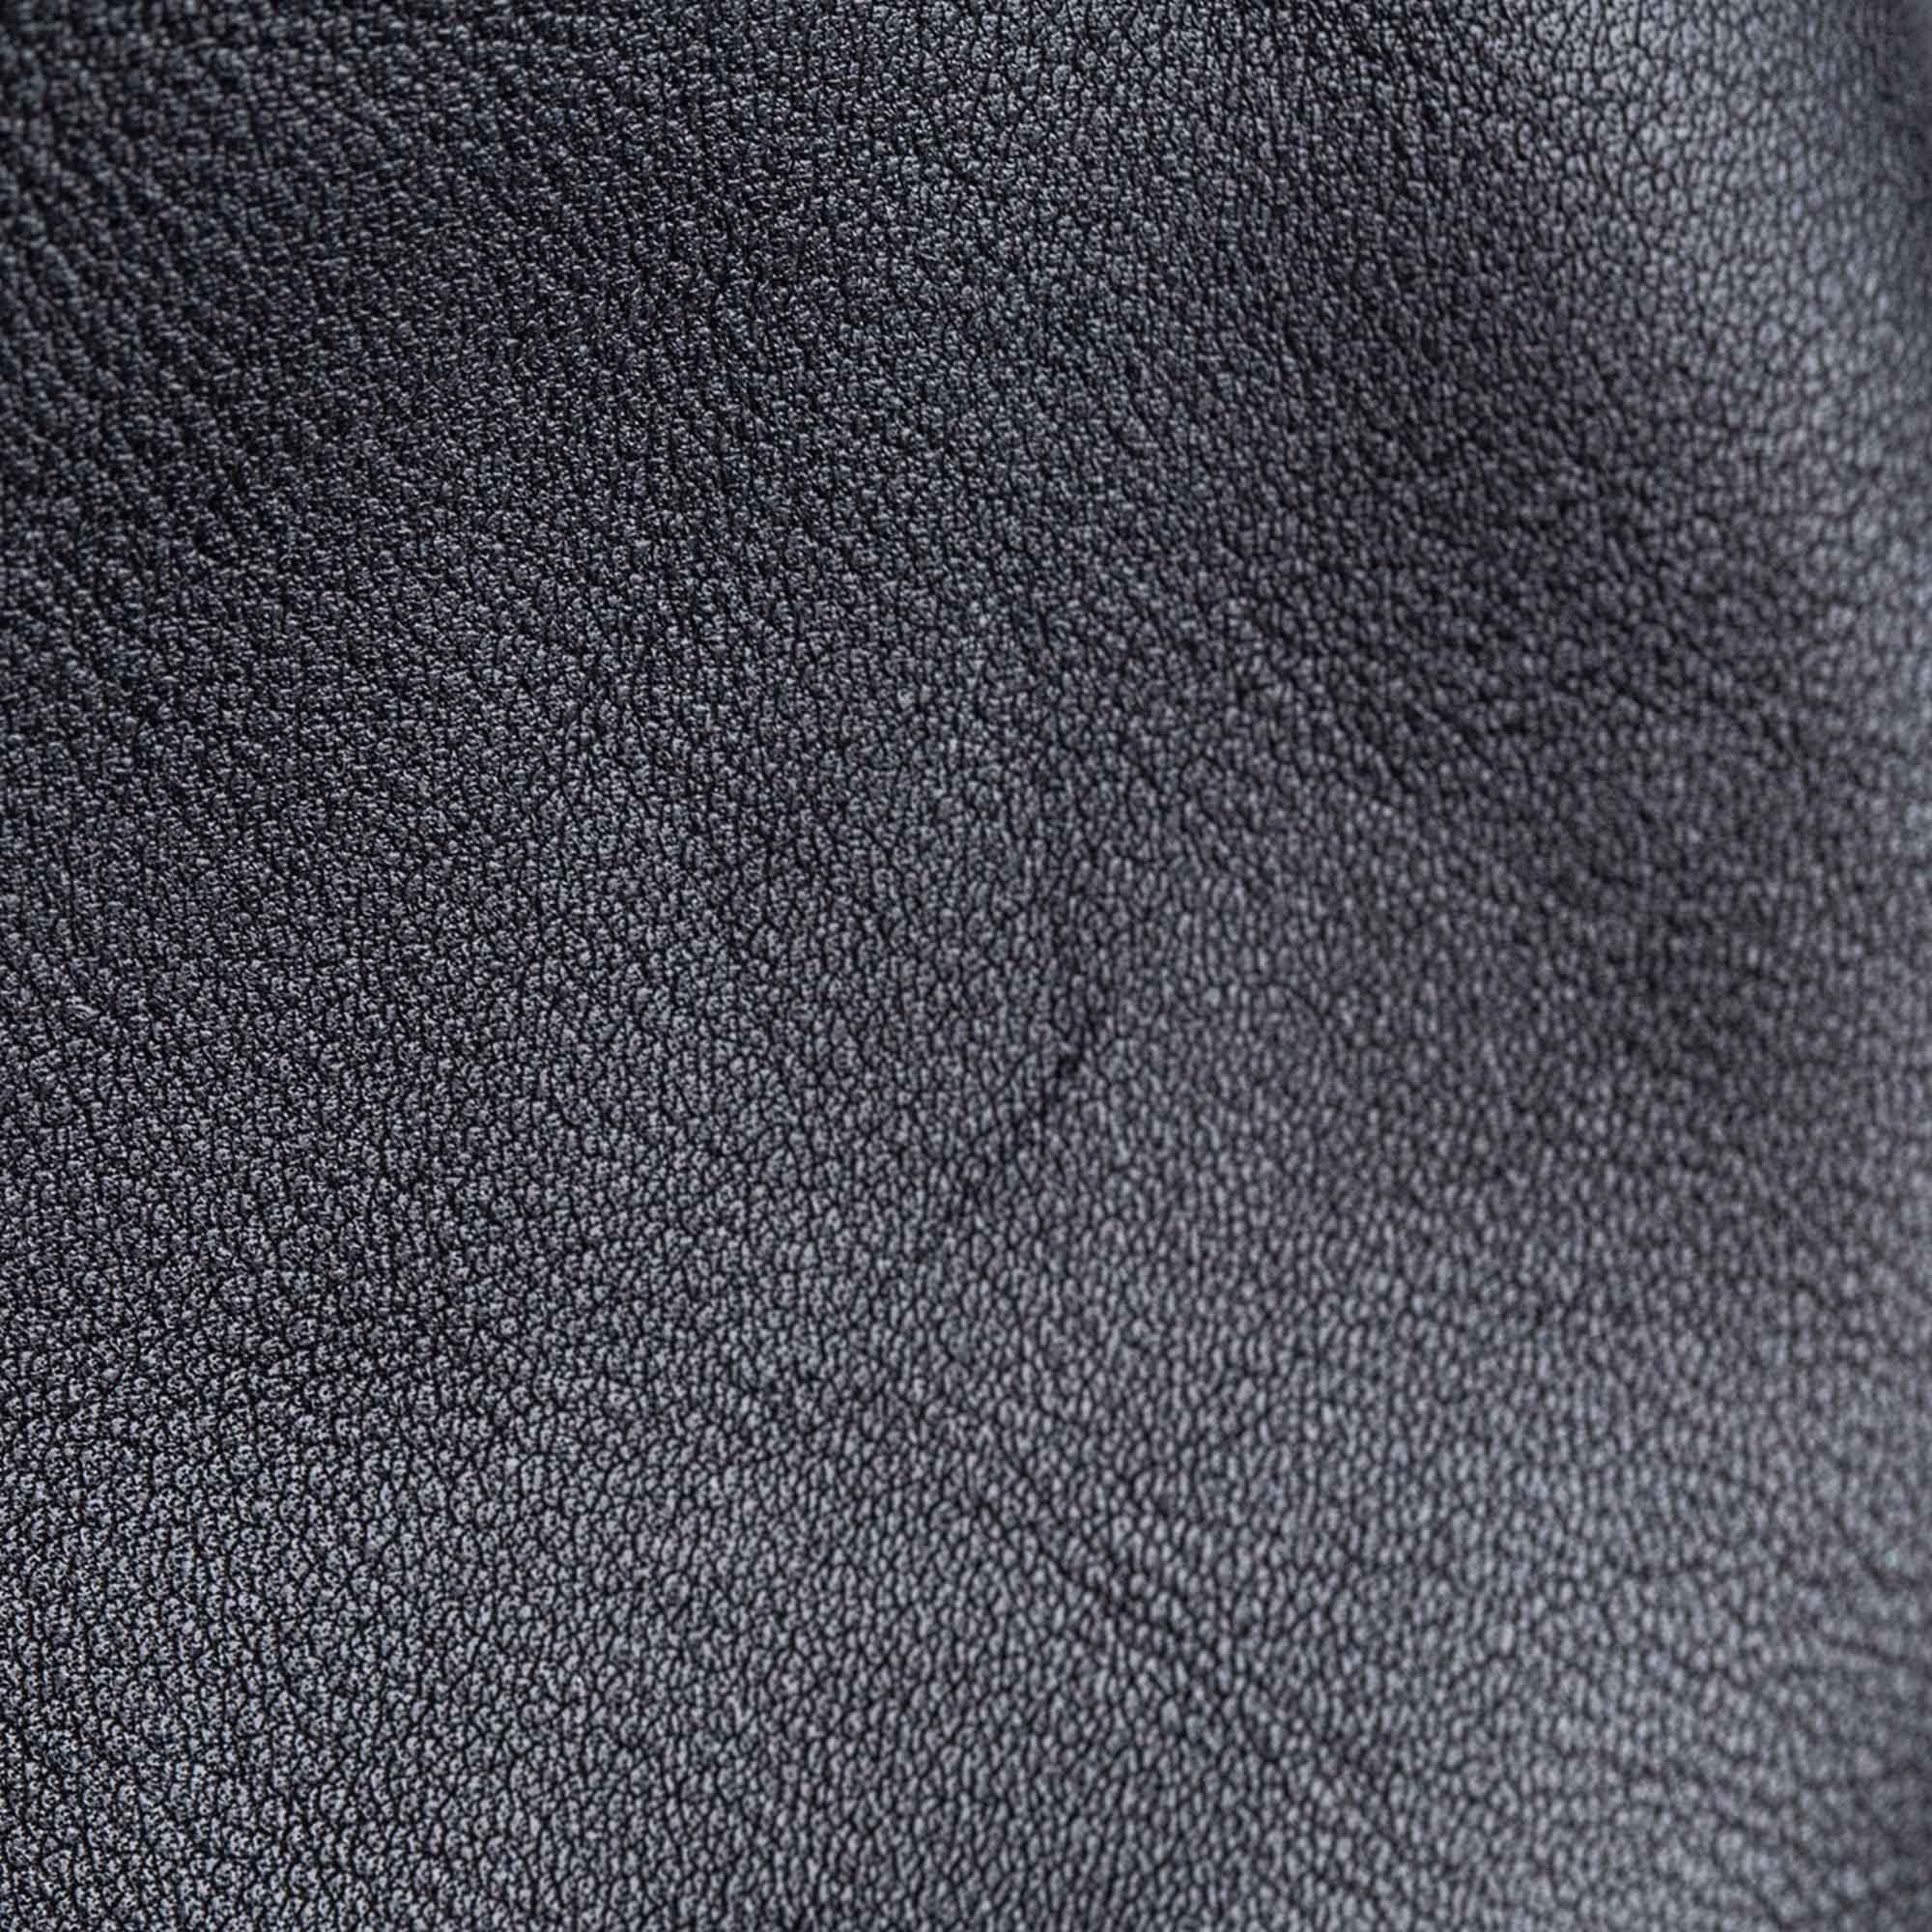 Vintage Authentic Gucci Black Leather Shoulder Bag Italy MEDIUM  For Sale 5